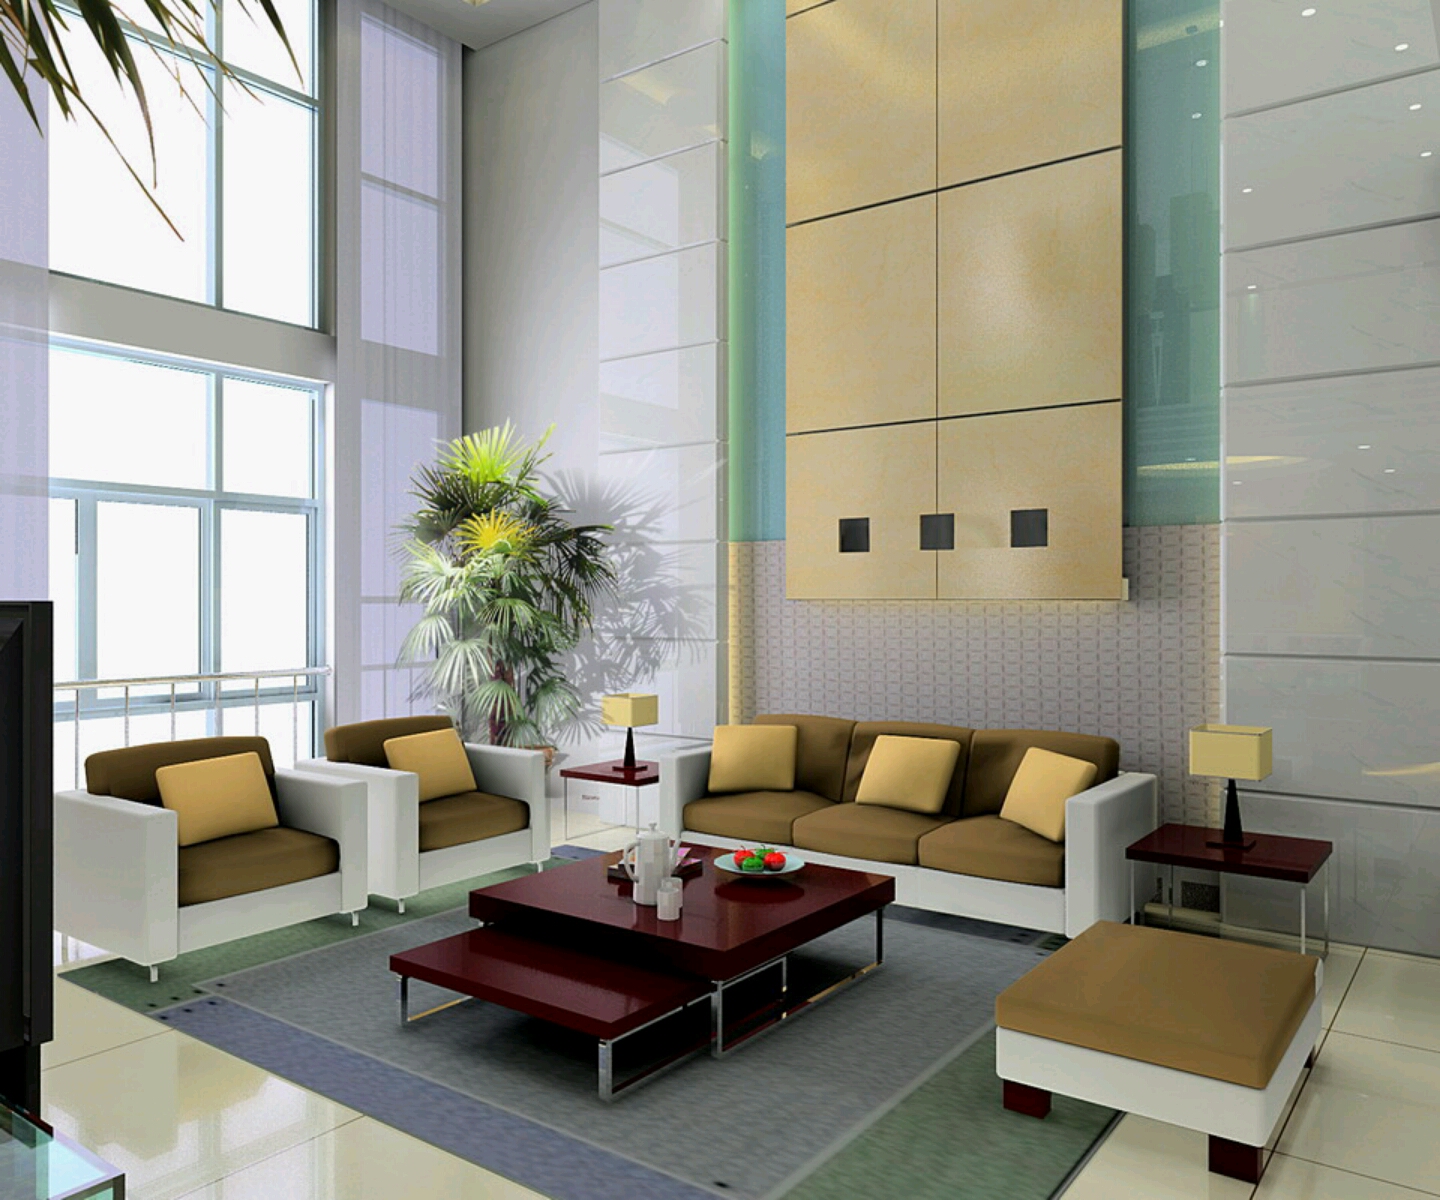 Luxury living rooms interior modern designs ideas. | Home ...